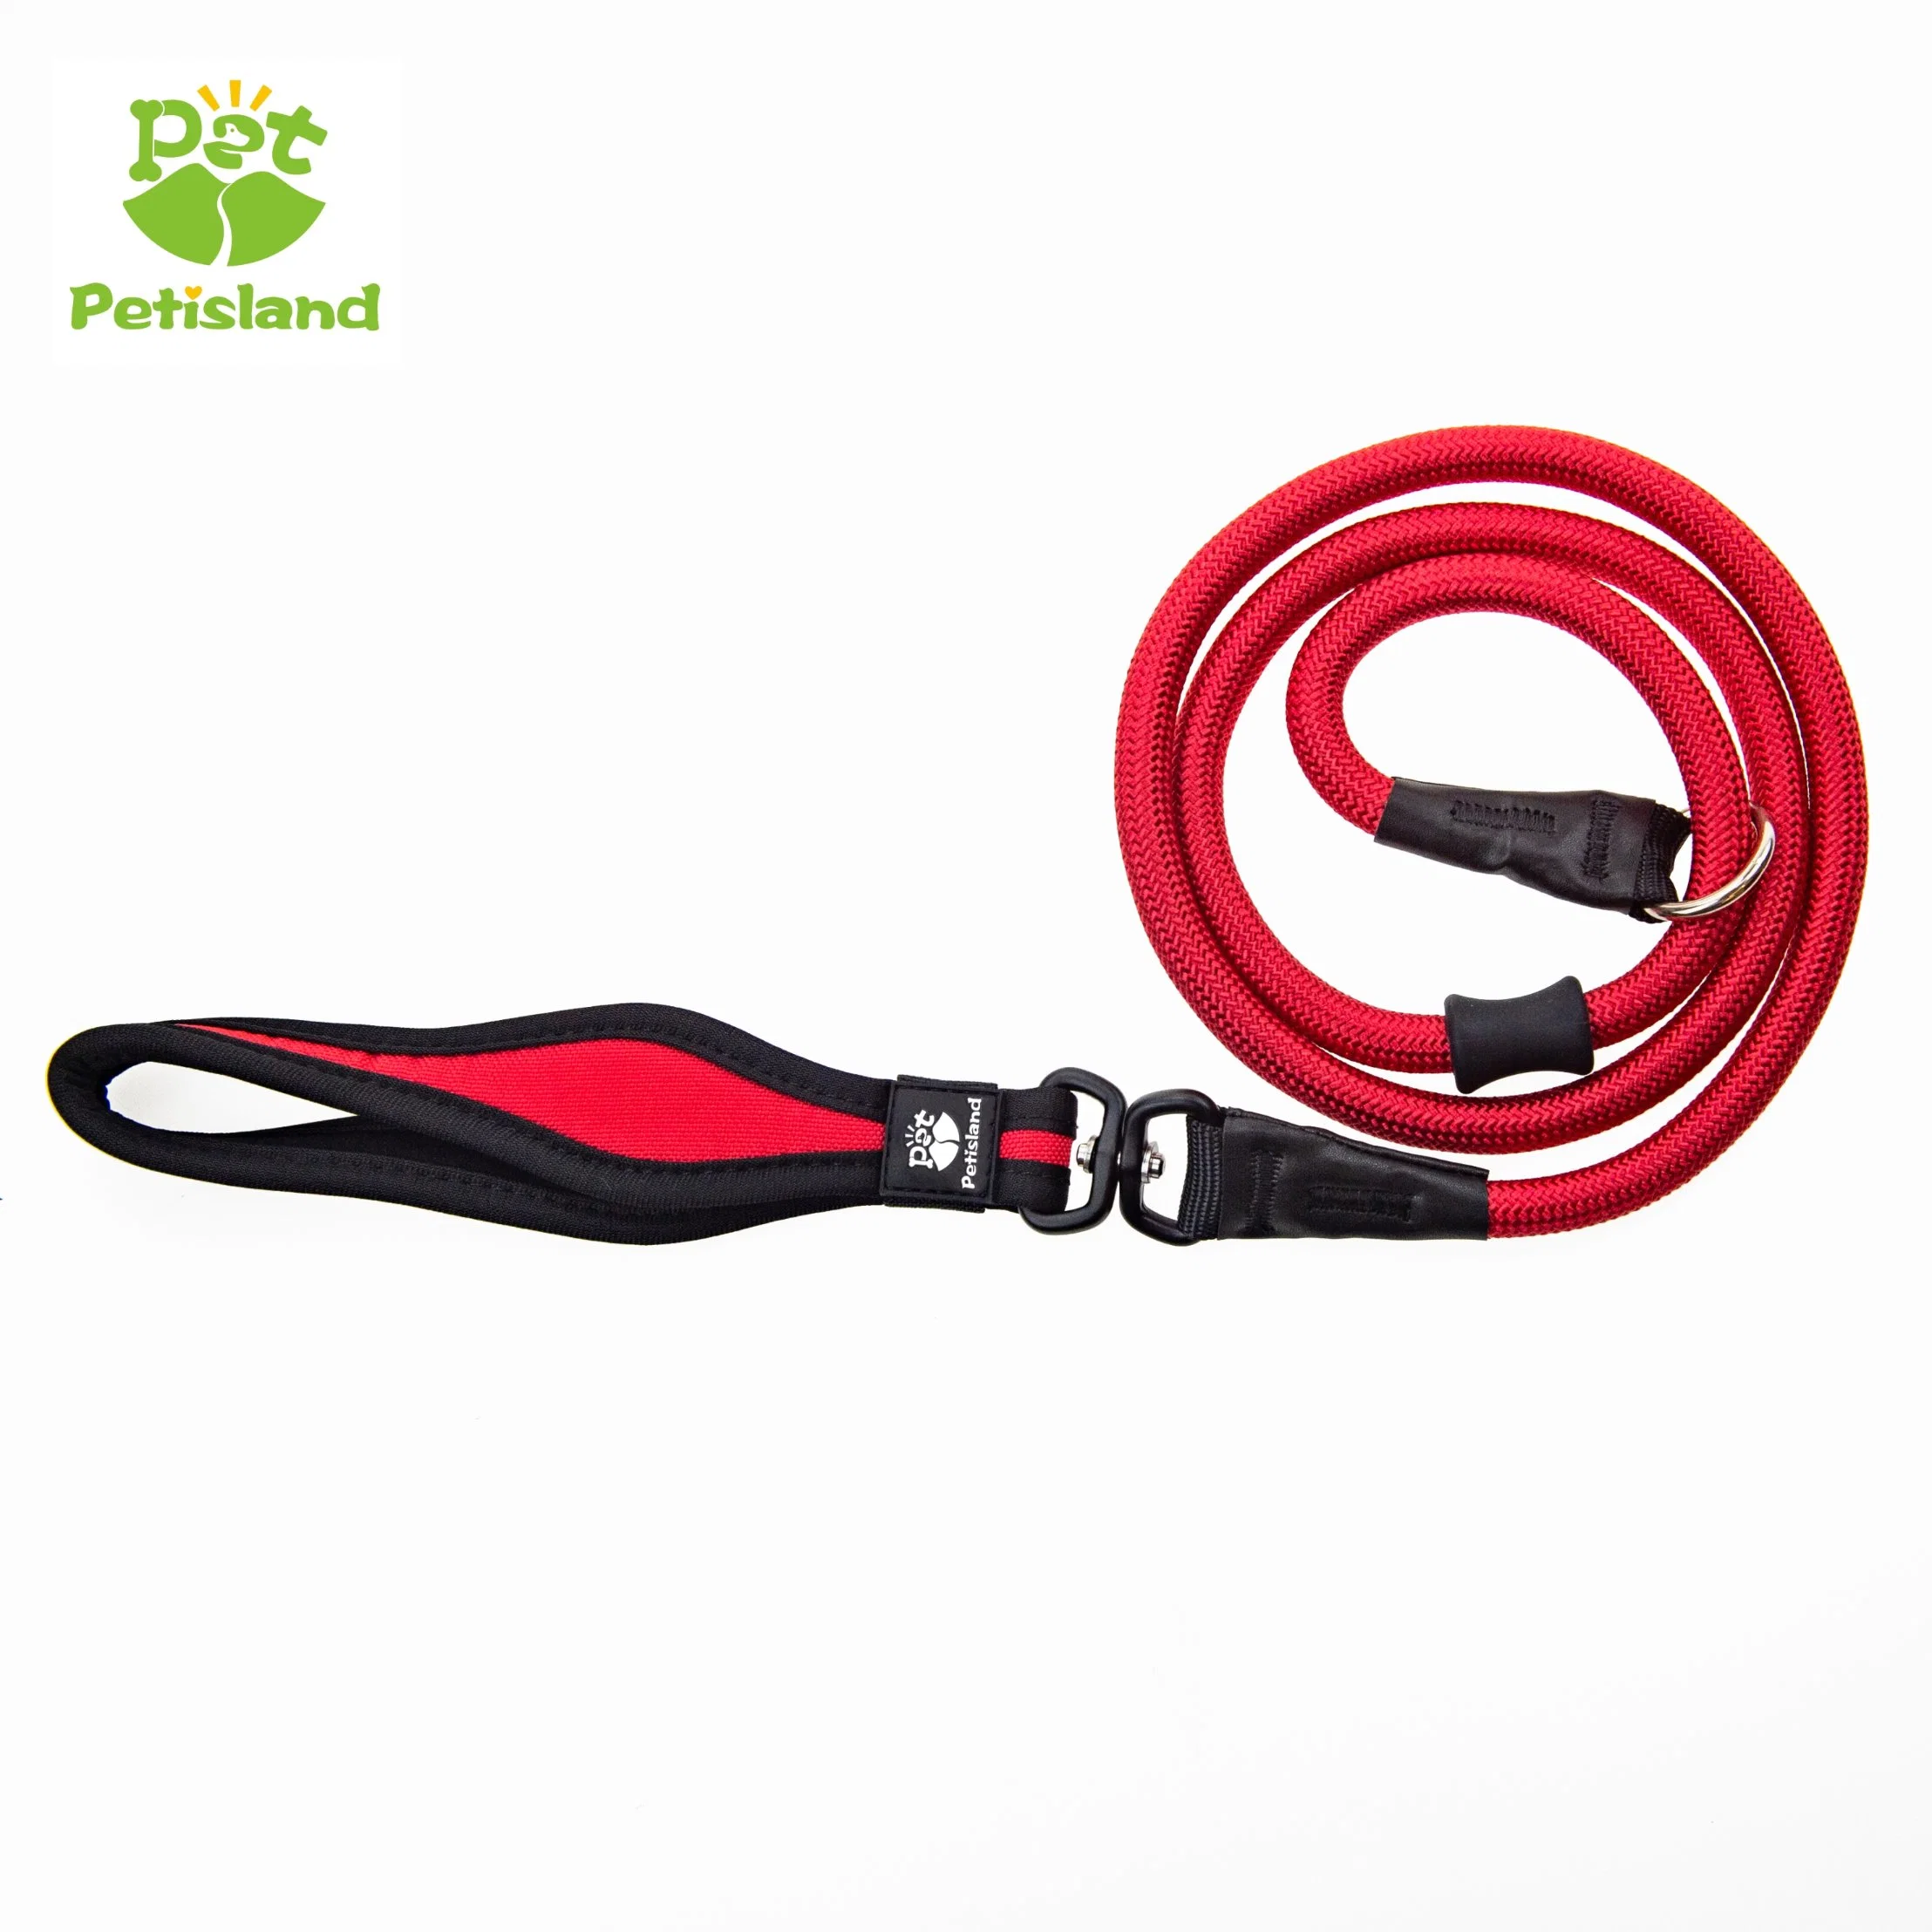 Pestisland New Design Pet Products Free Sample Red Pet Leash High Elasticitytraining Dog Leash